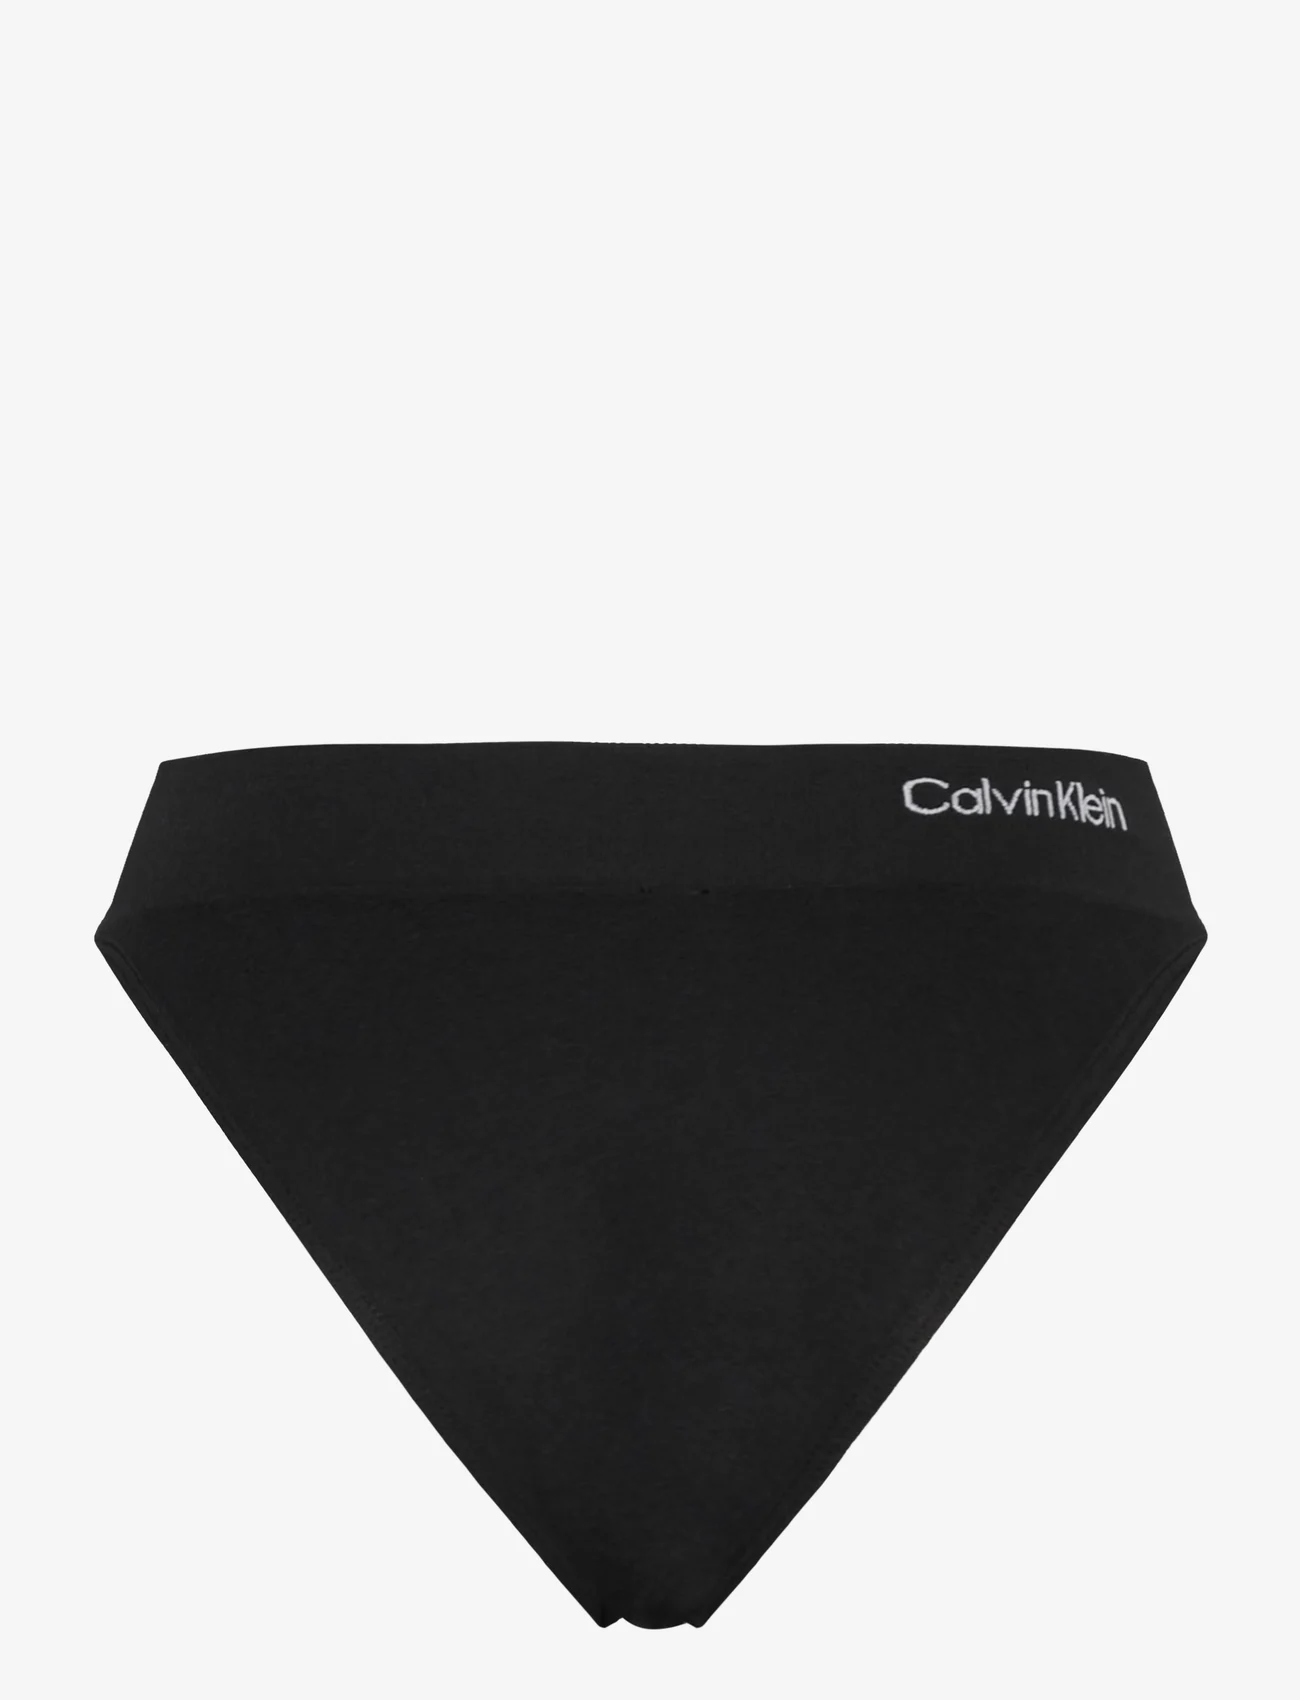 Calvin Klein - HIGH WAIST BIKINI - kõrge pihaga bikiinid - pvh black - 1